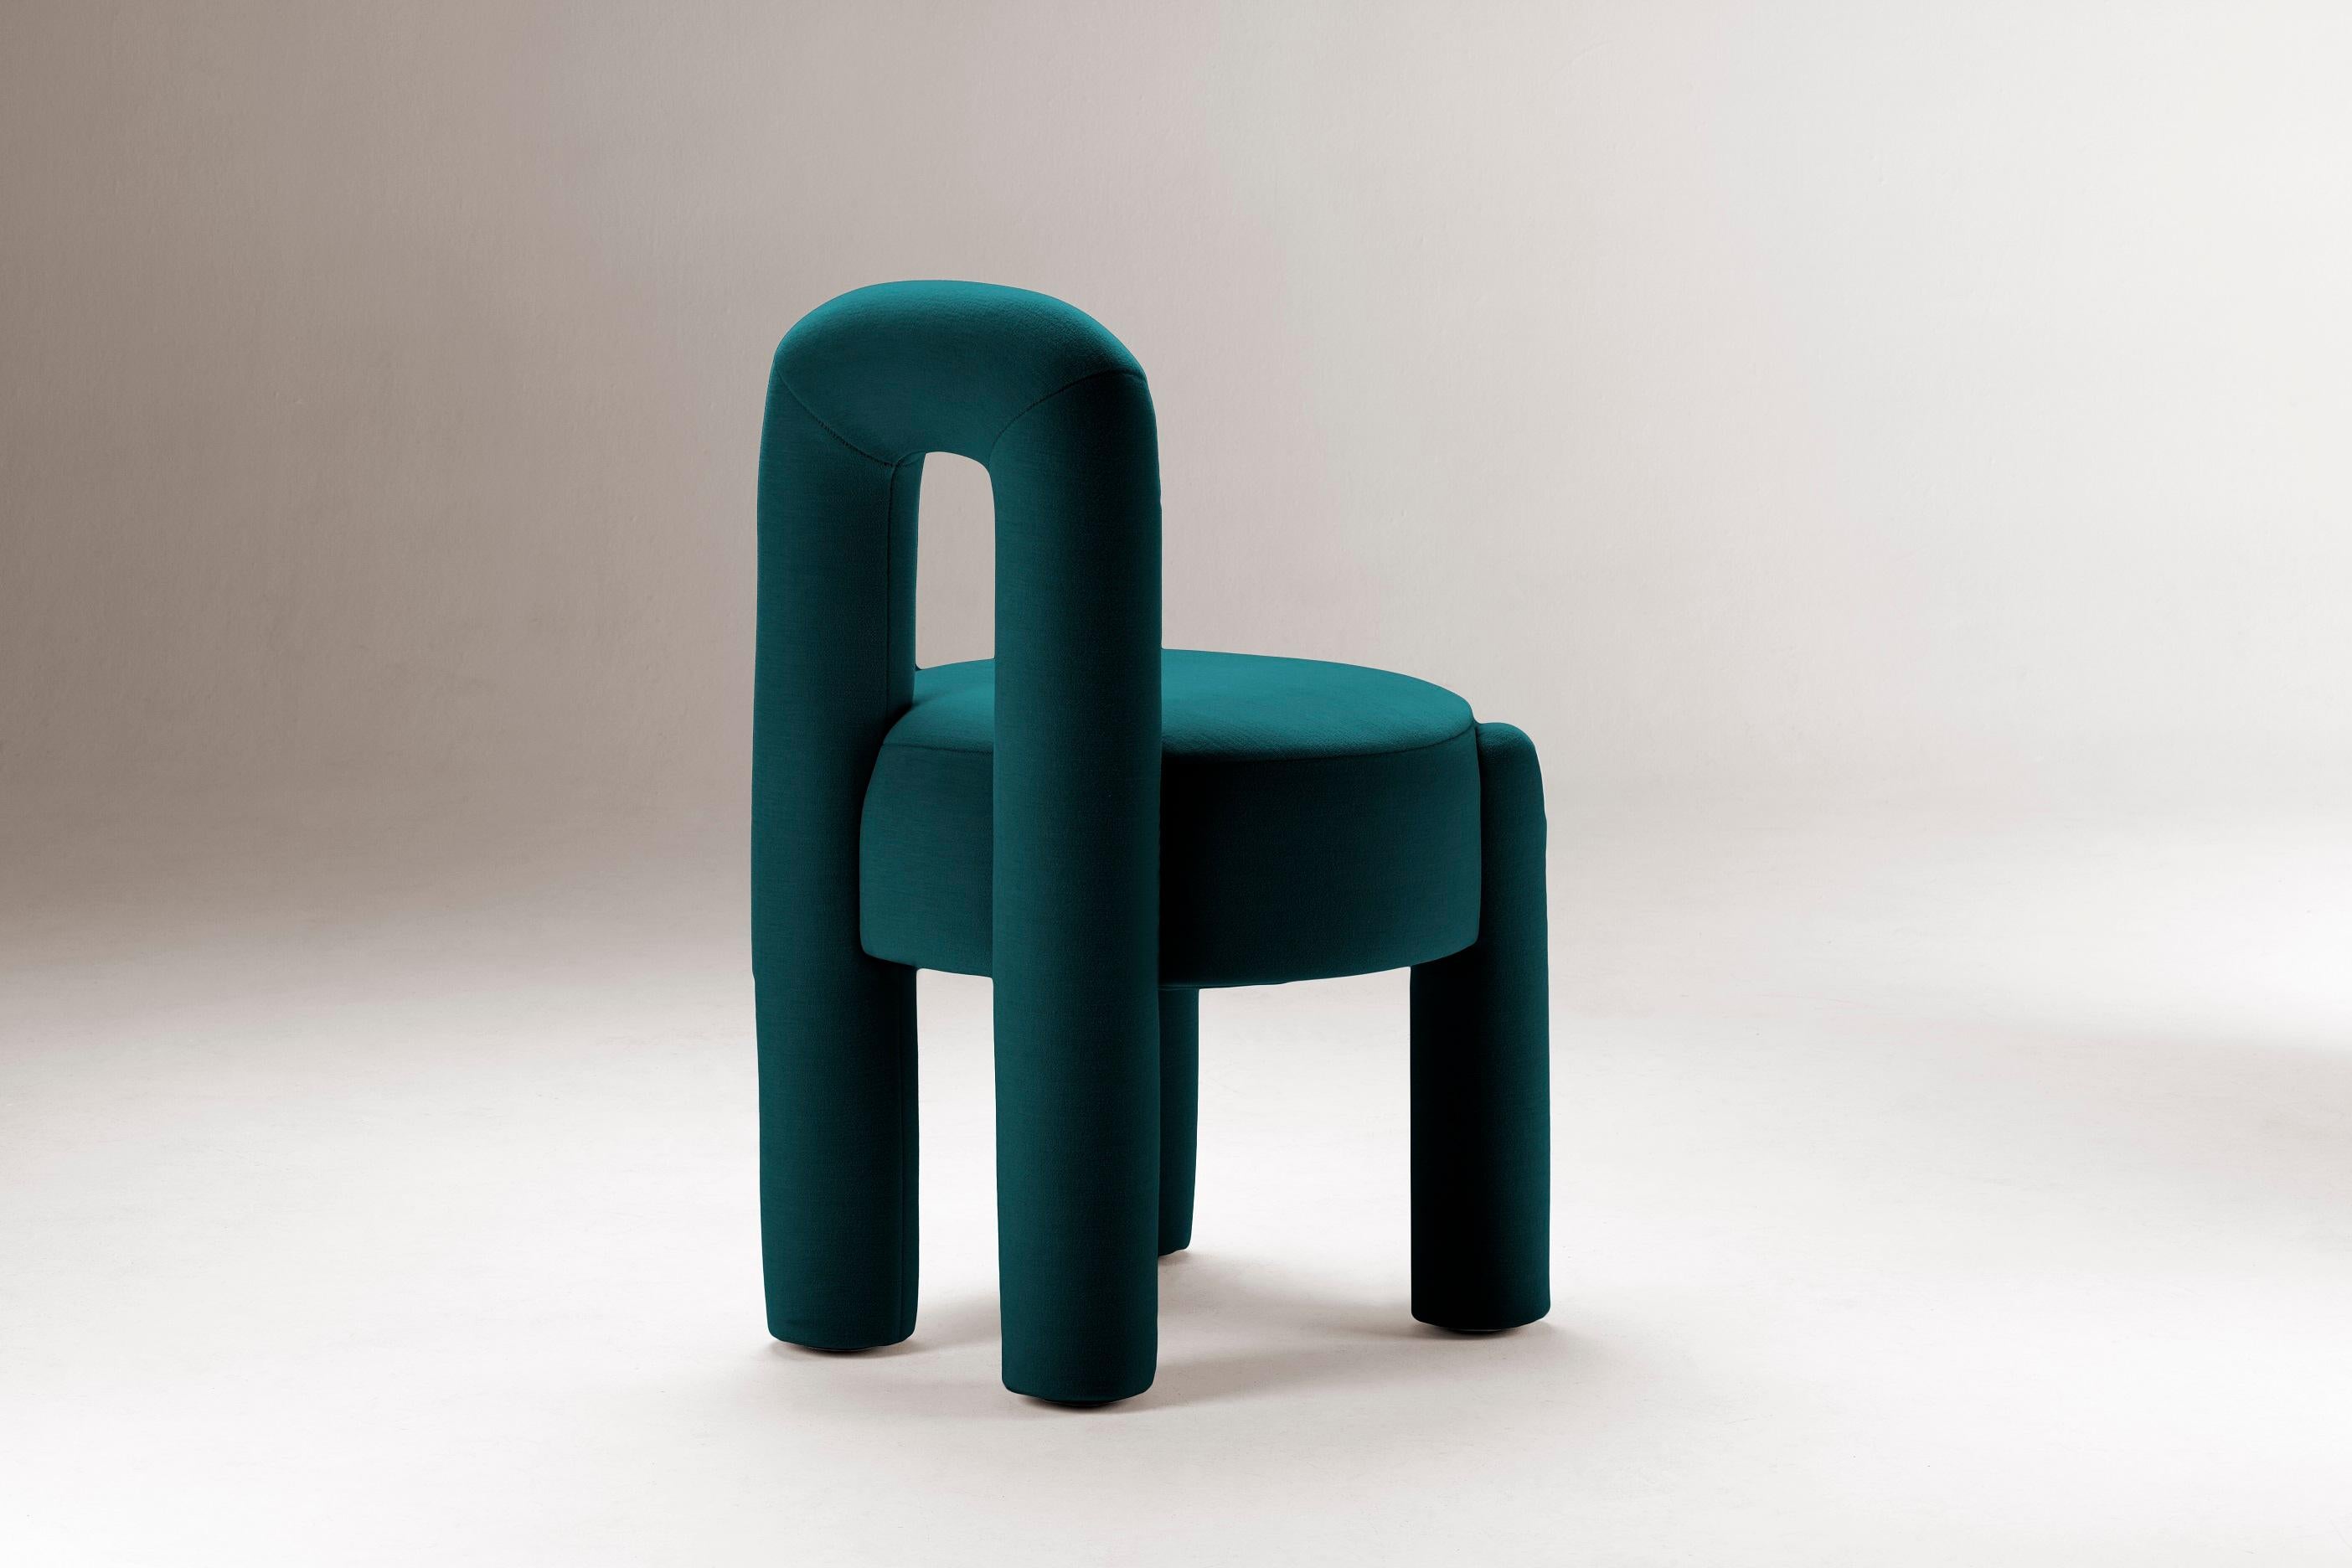 Portuguese DOOQ! Organic Modern Marlon Chair, Teal Kvadrat by P.Franceschini For Sale